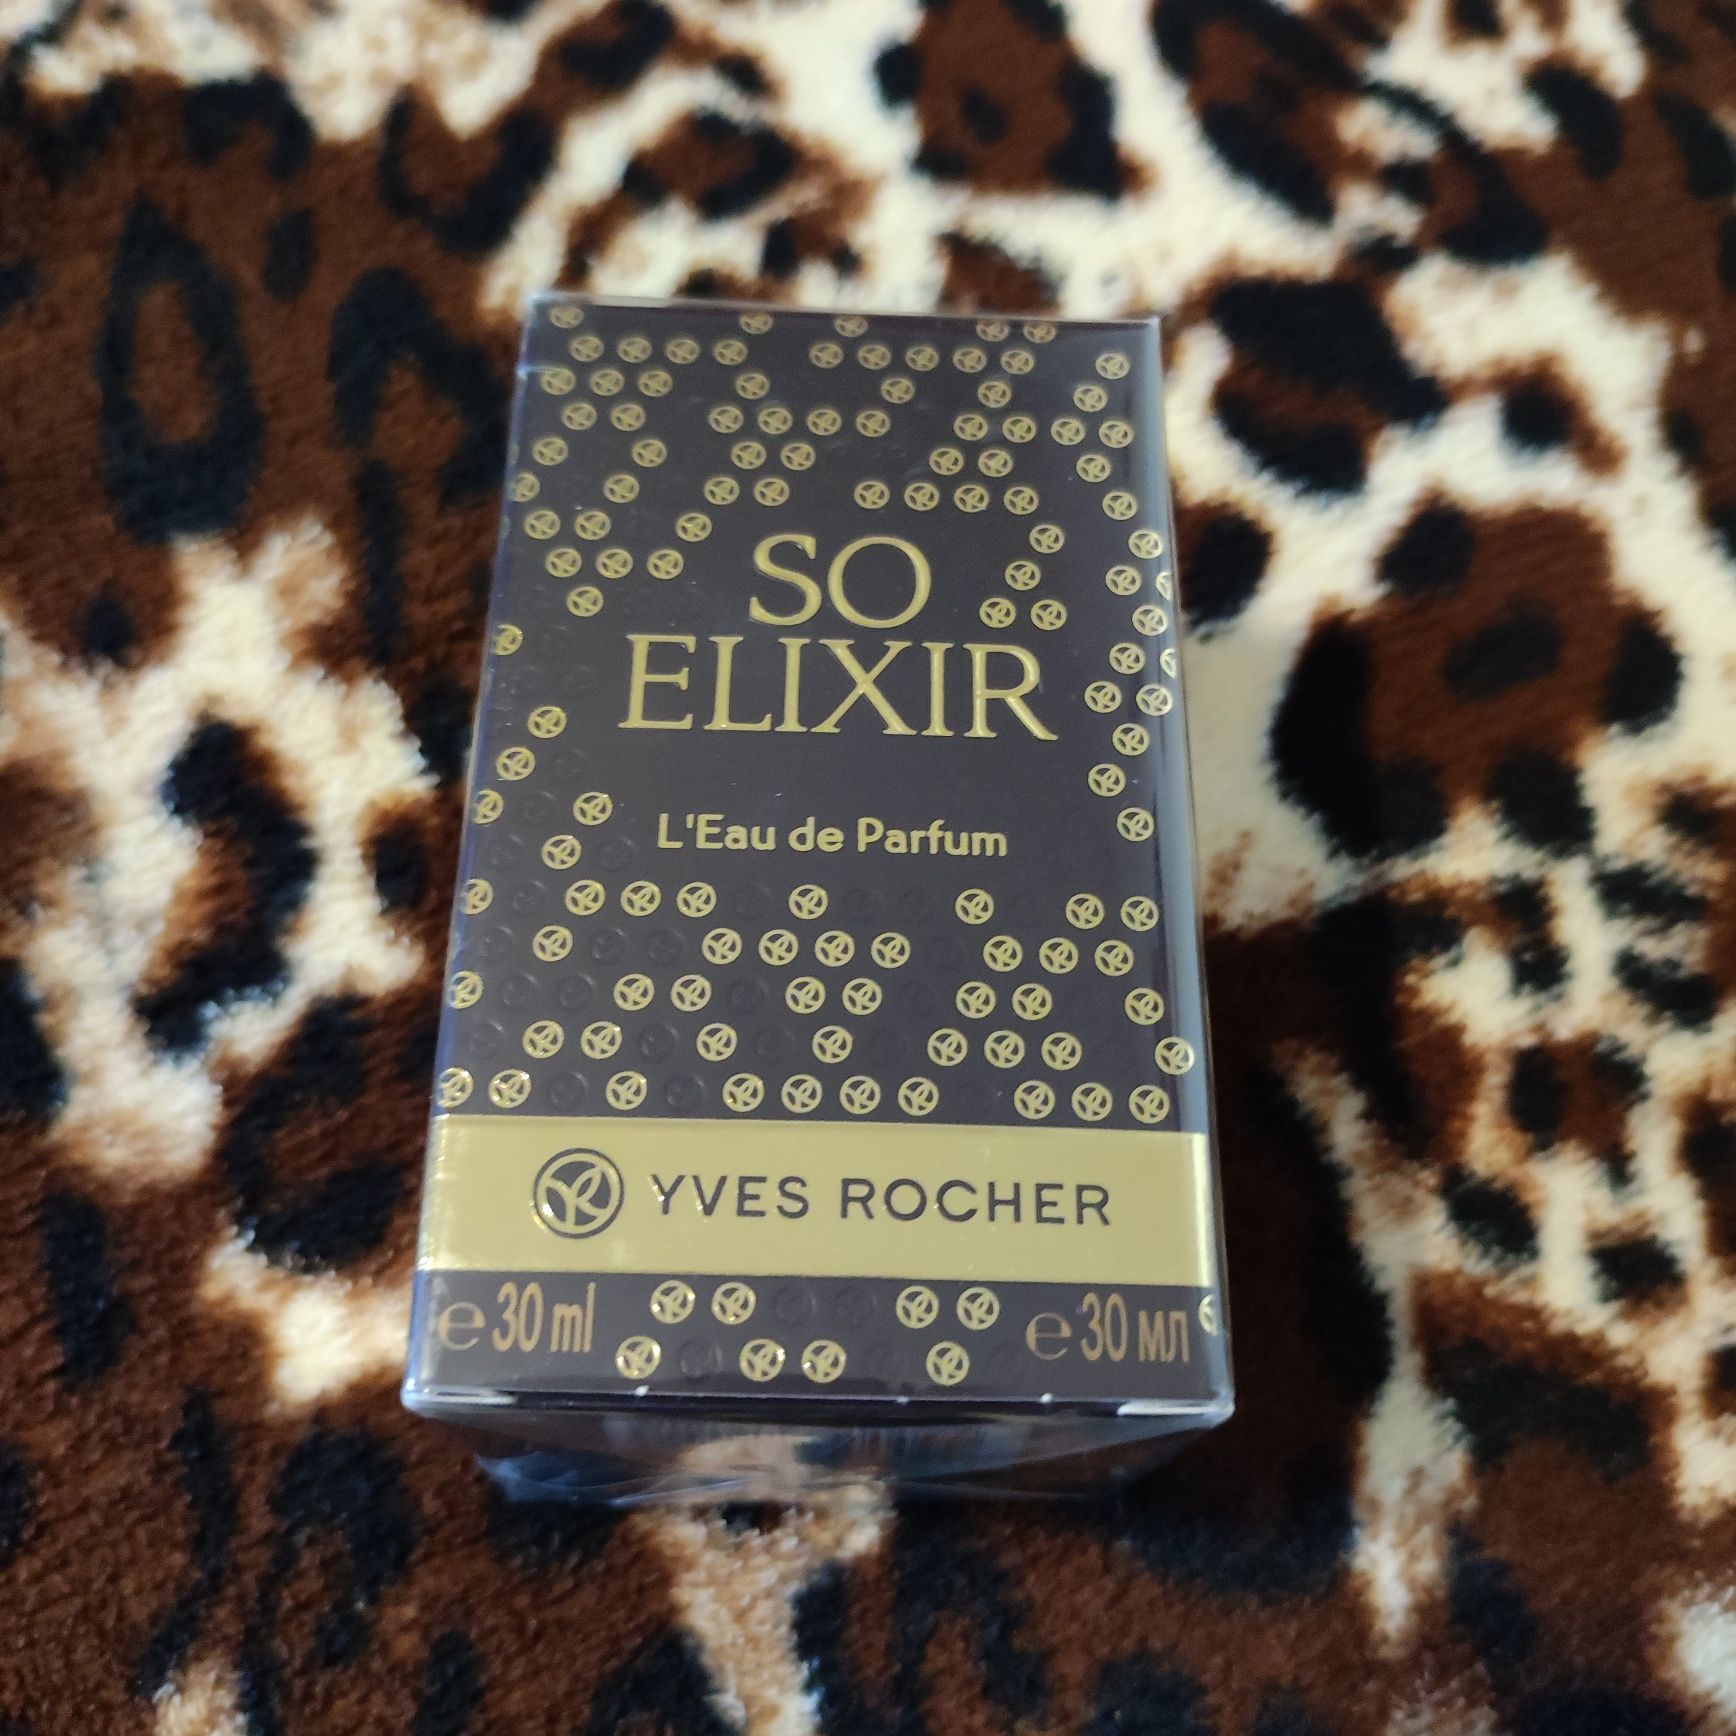 Parfum So Elixir Purple, 30 ml, Yves Rocher